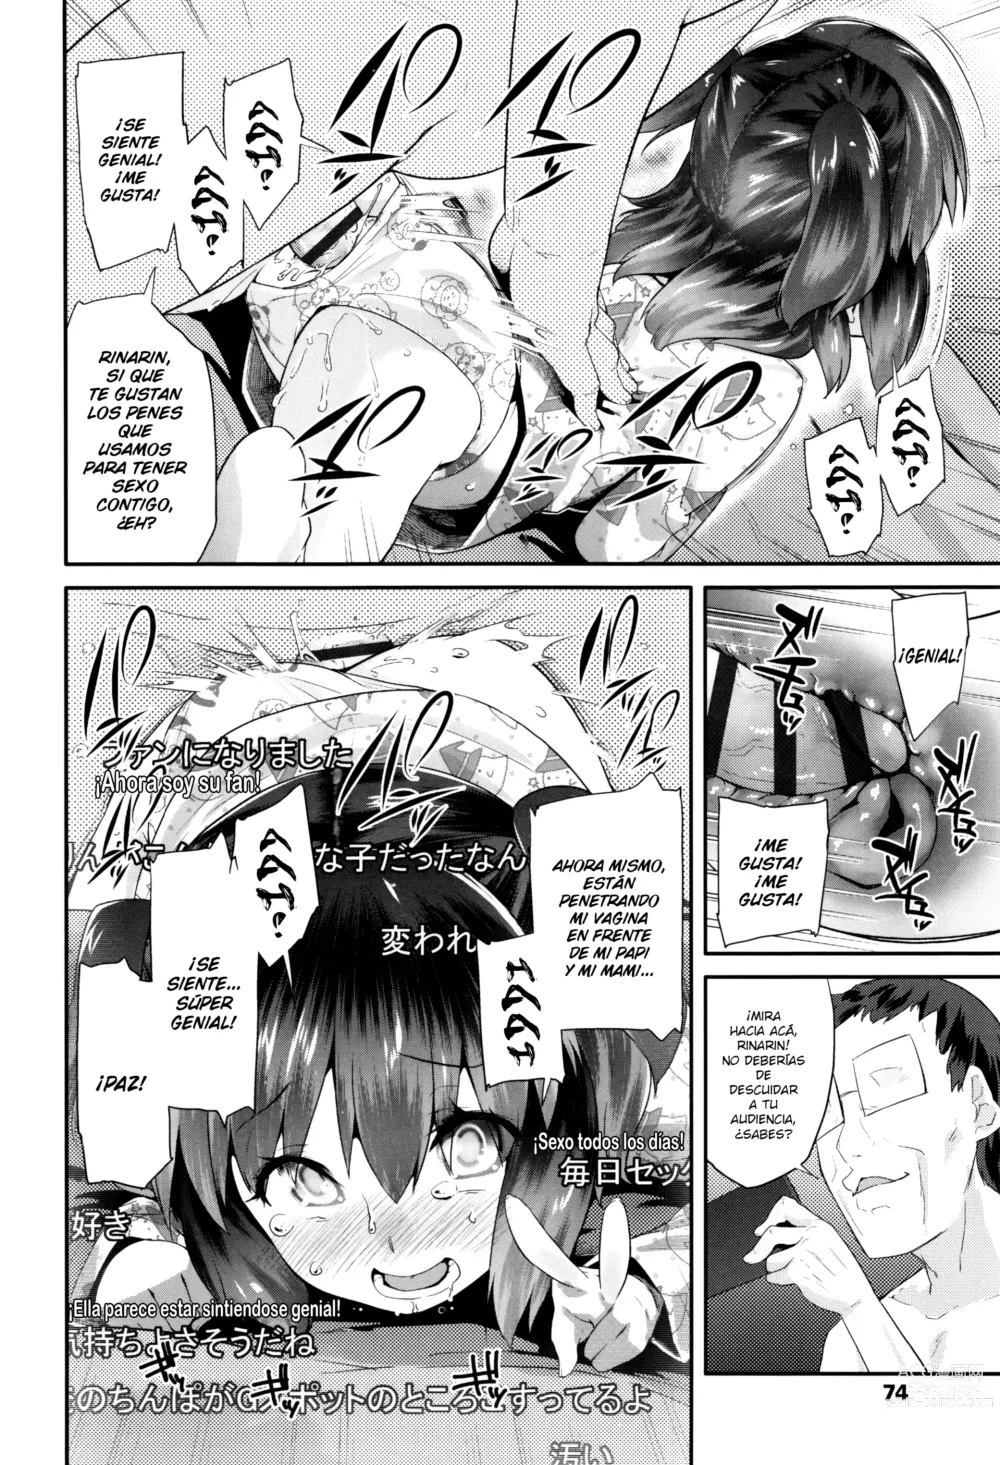 Page 70 of doujinshi Pako Pako Rina Rin 1-4